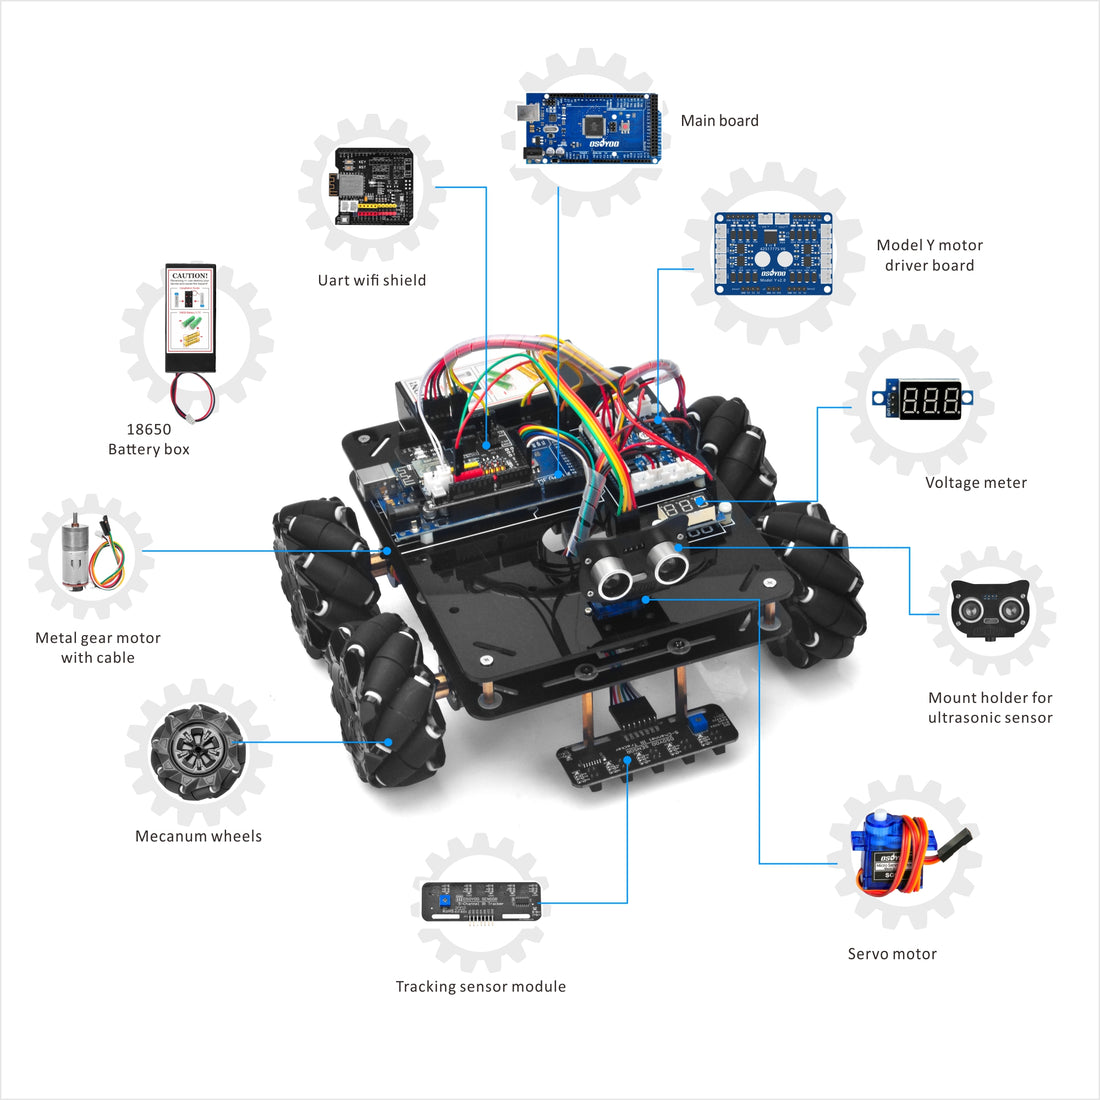 Mikroservo – SG90 Blau für OSOYOO V2.0 Roboterauto (Modell#LACC200610)